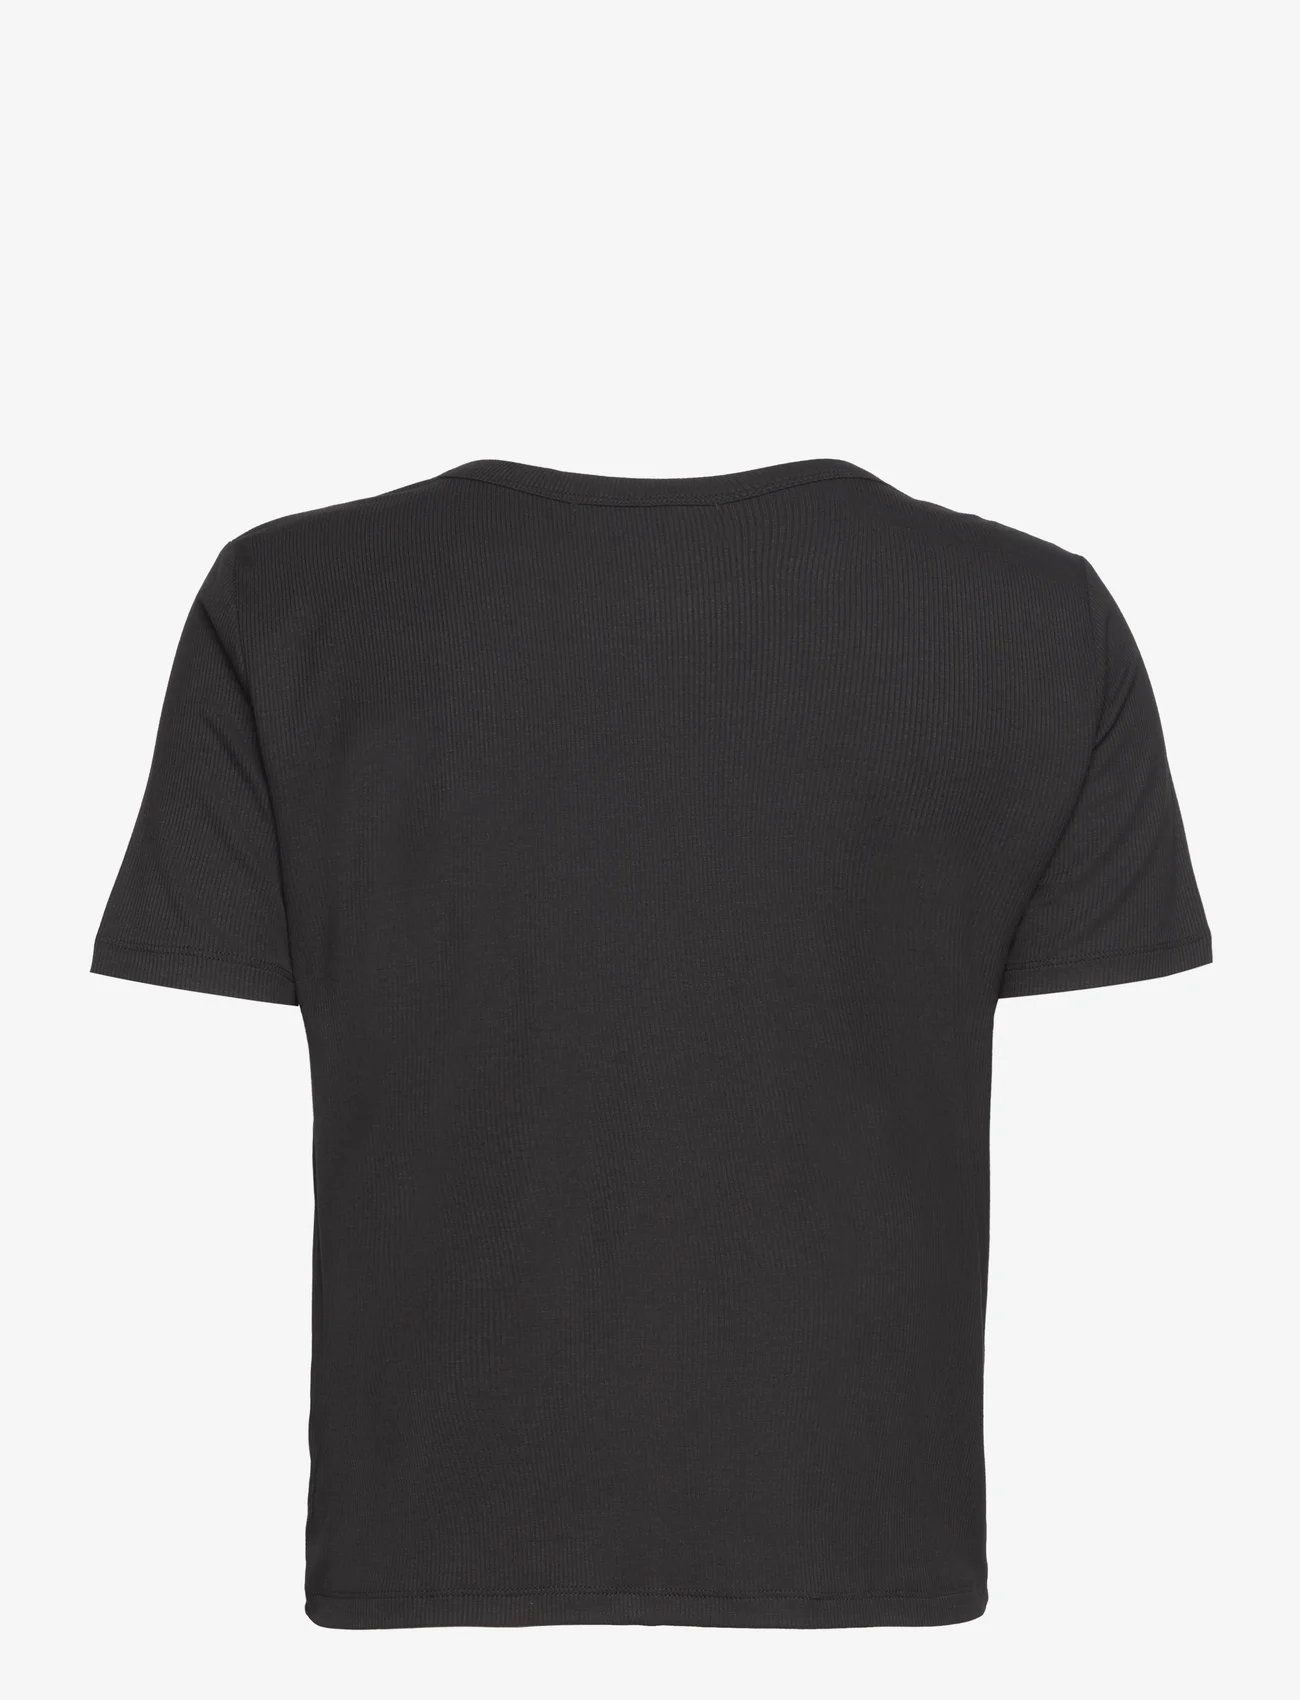 Sofie Schnoor - T-Shirt - t-shirts - black - 1